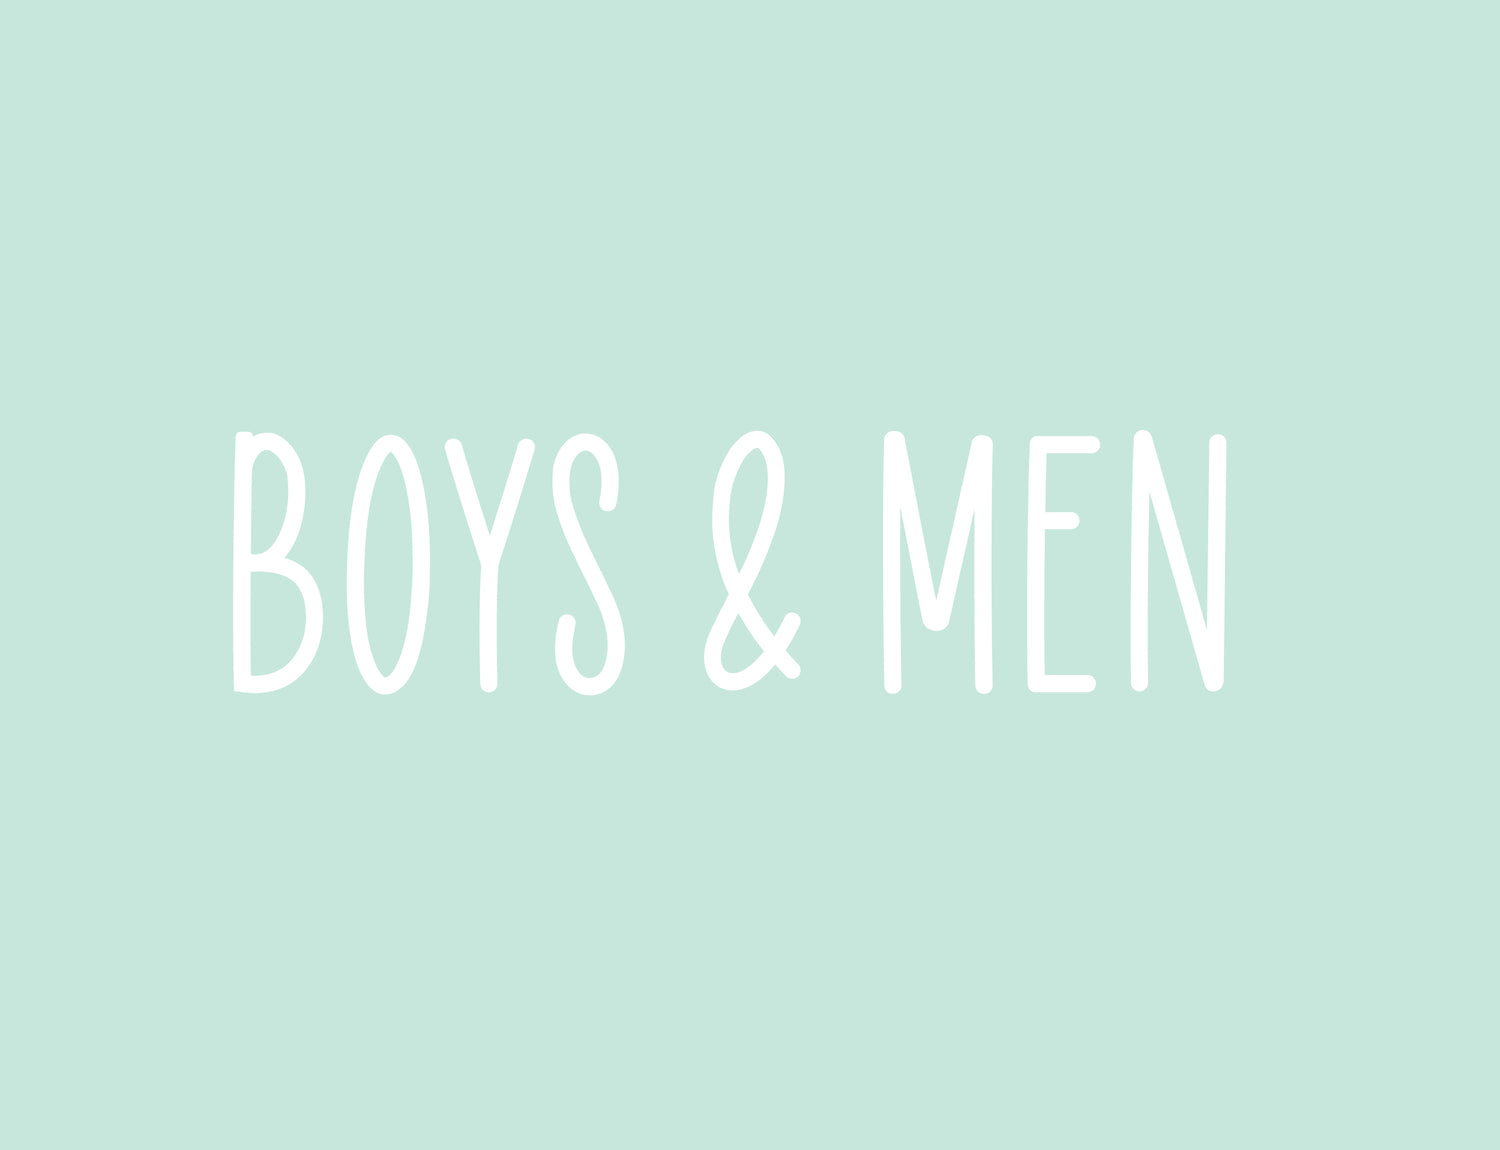 Boys & Men